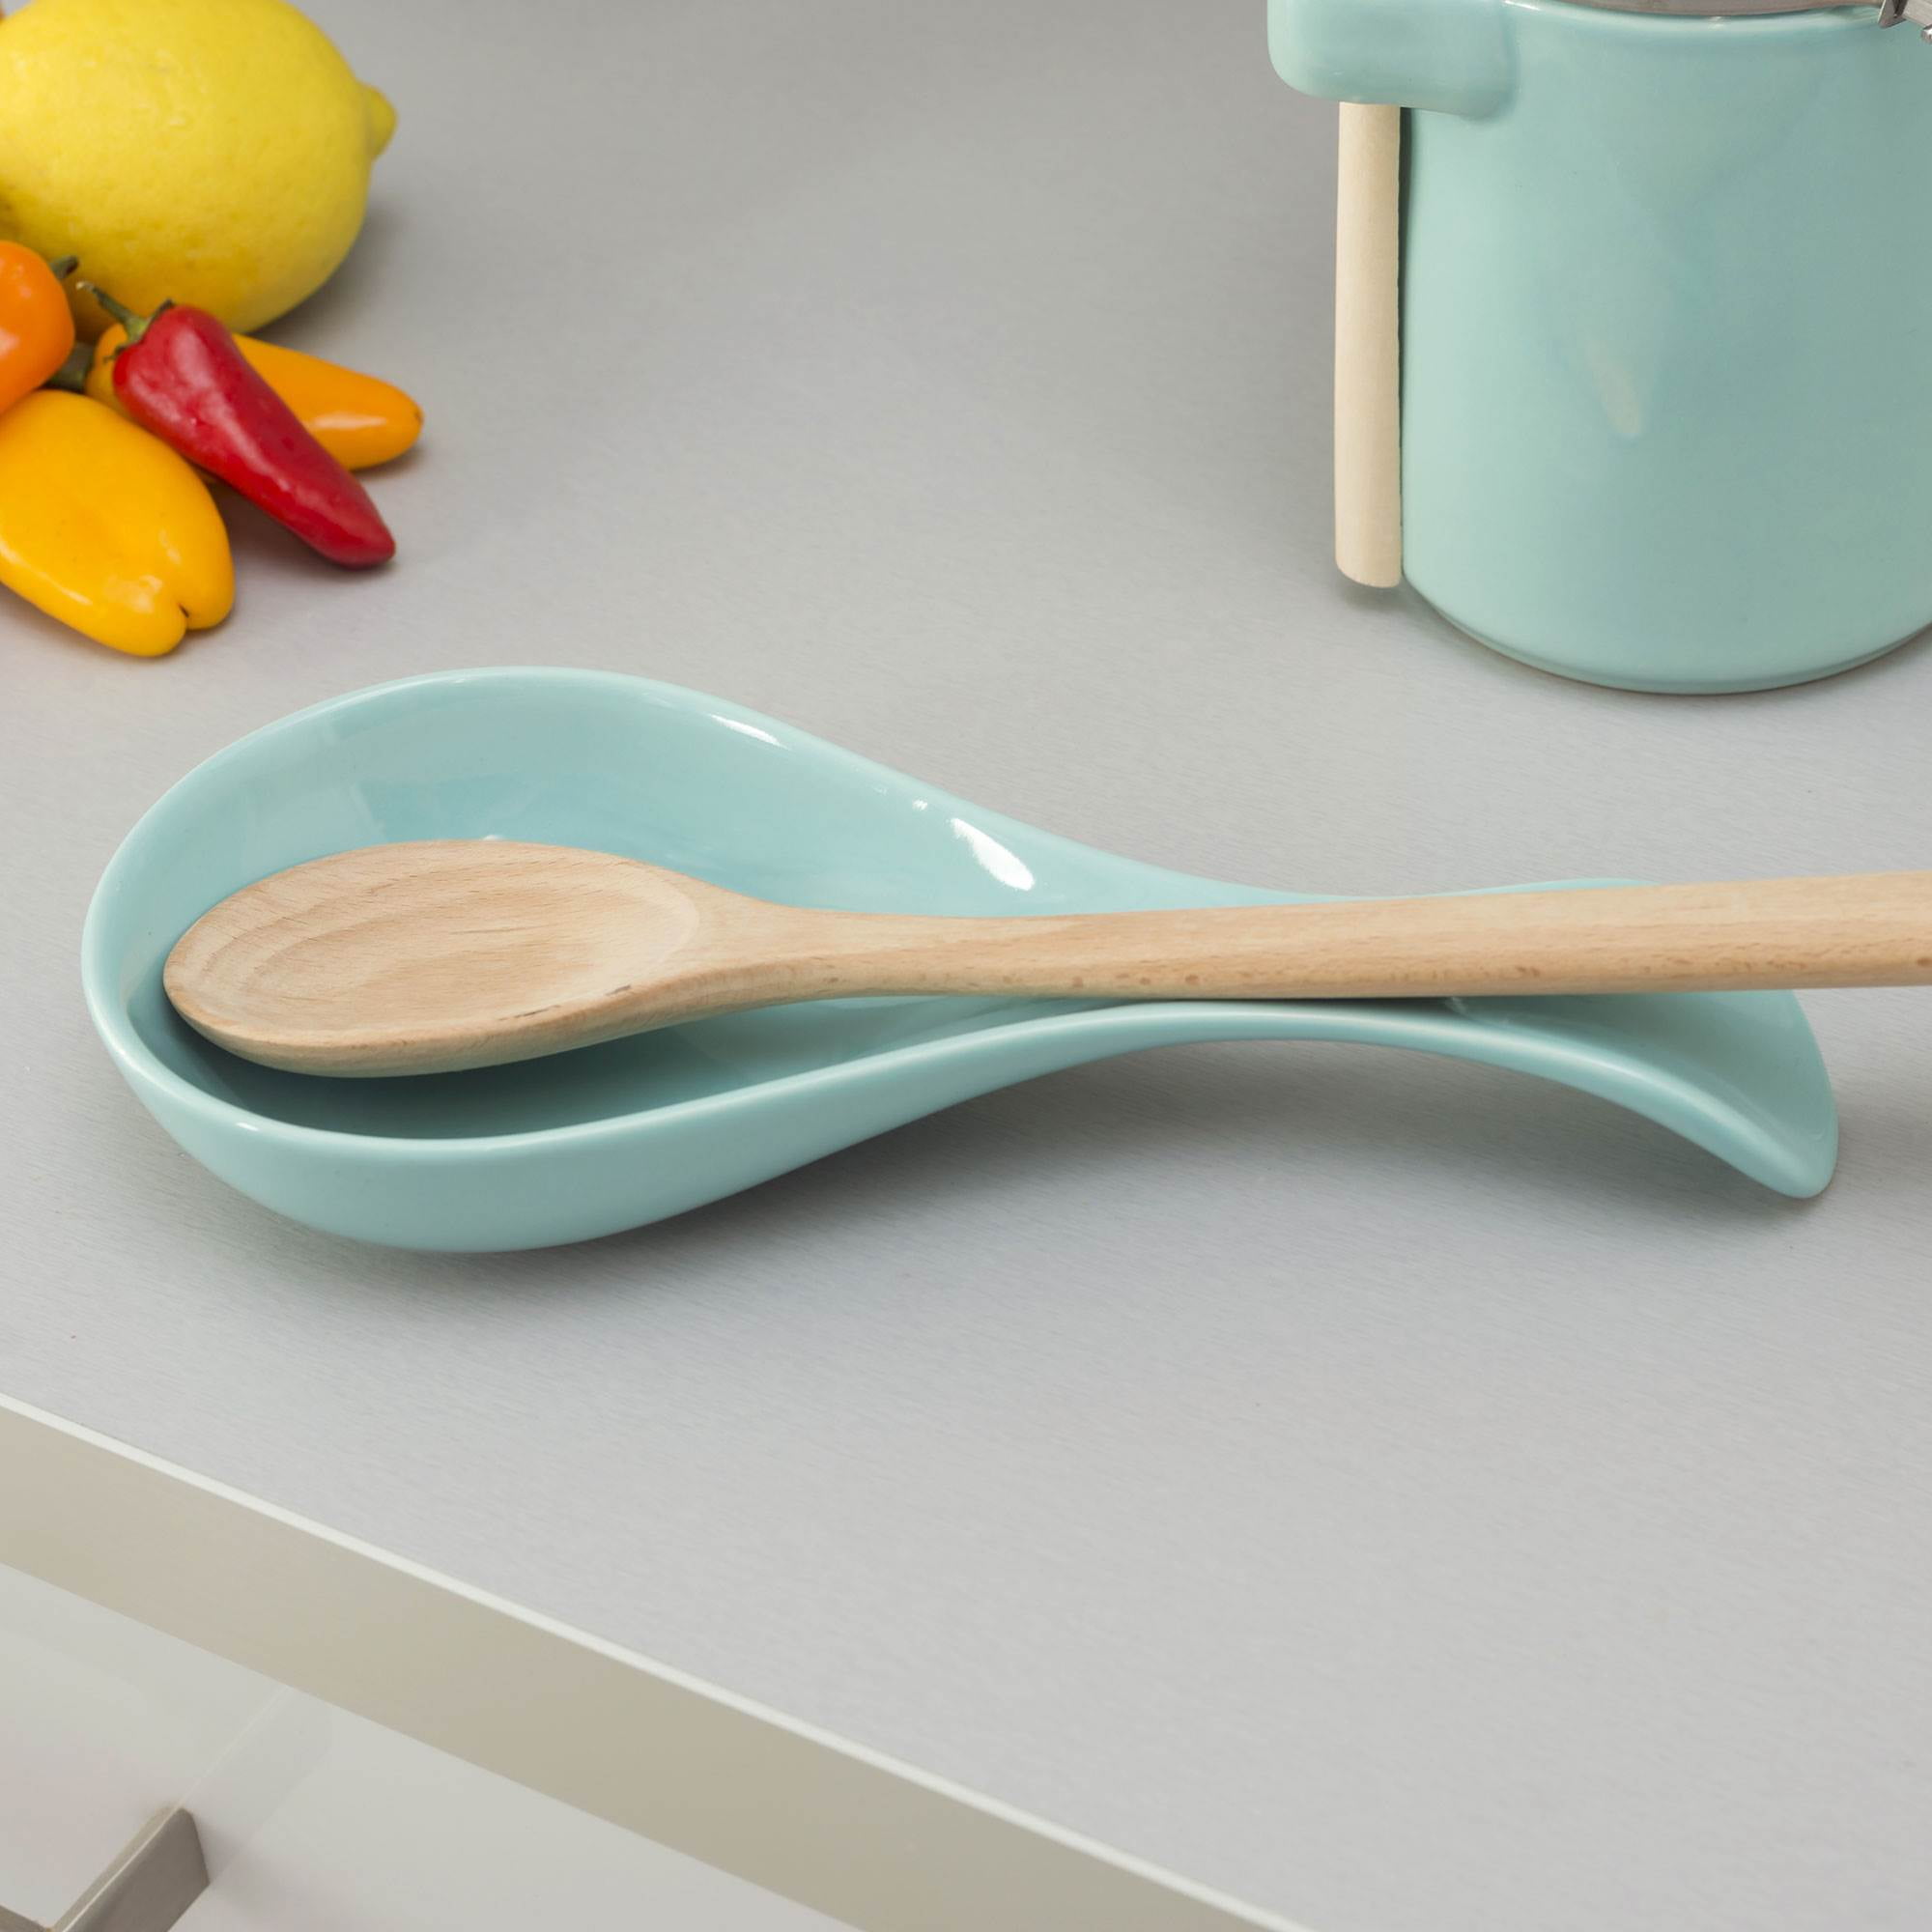 New Ceramic Spoon Rest Cooking Kitchen Tool Tea Bag Holder Blue Dotted  Design 